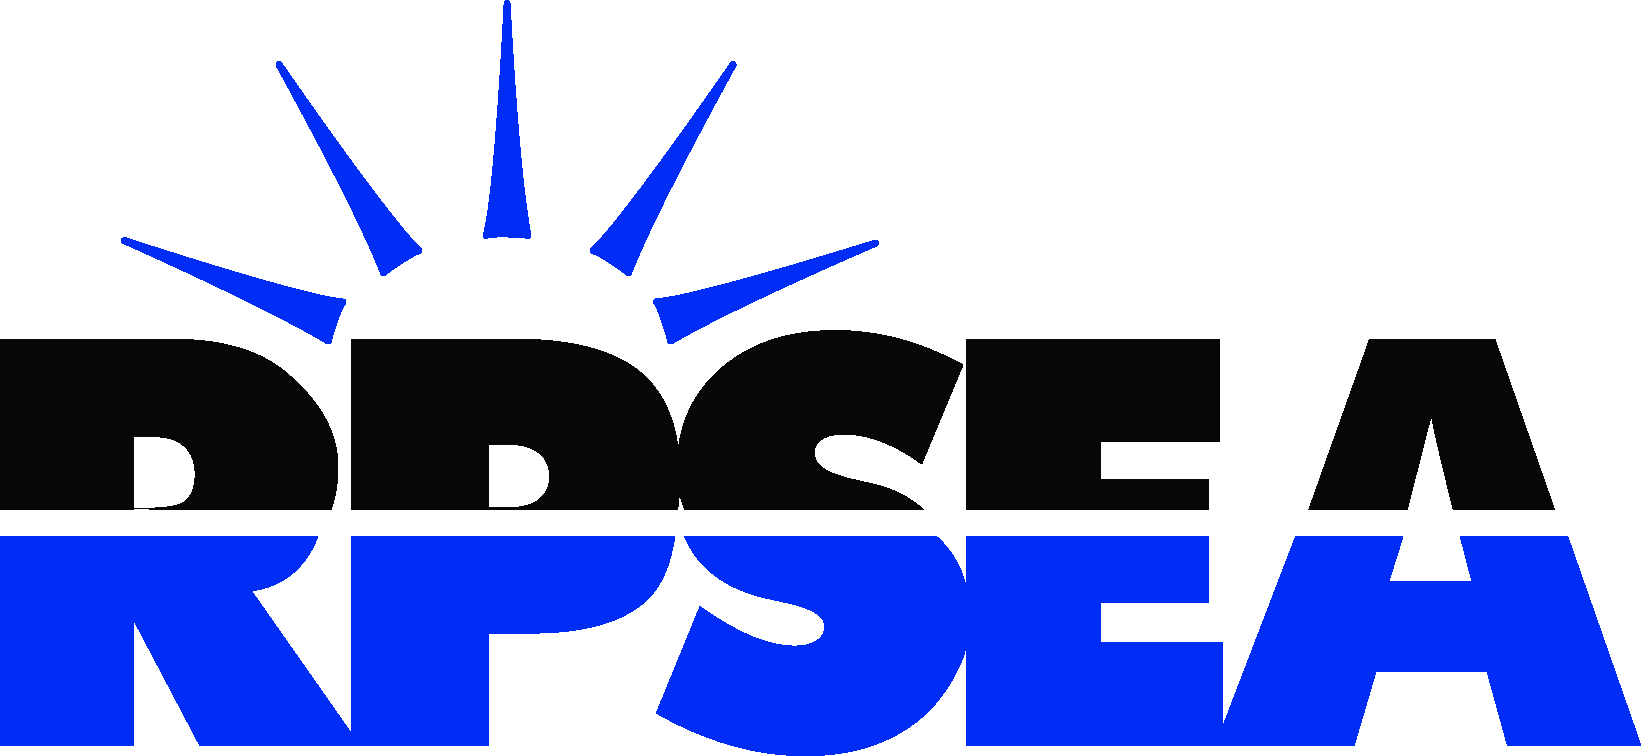 15RPSEA Logo C 10 20 16